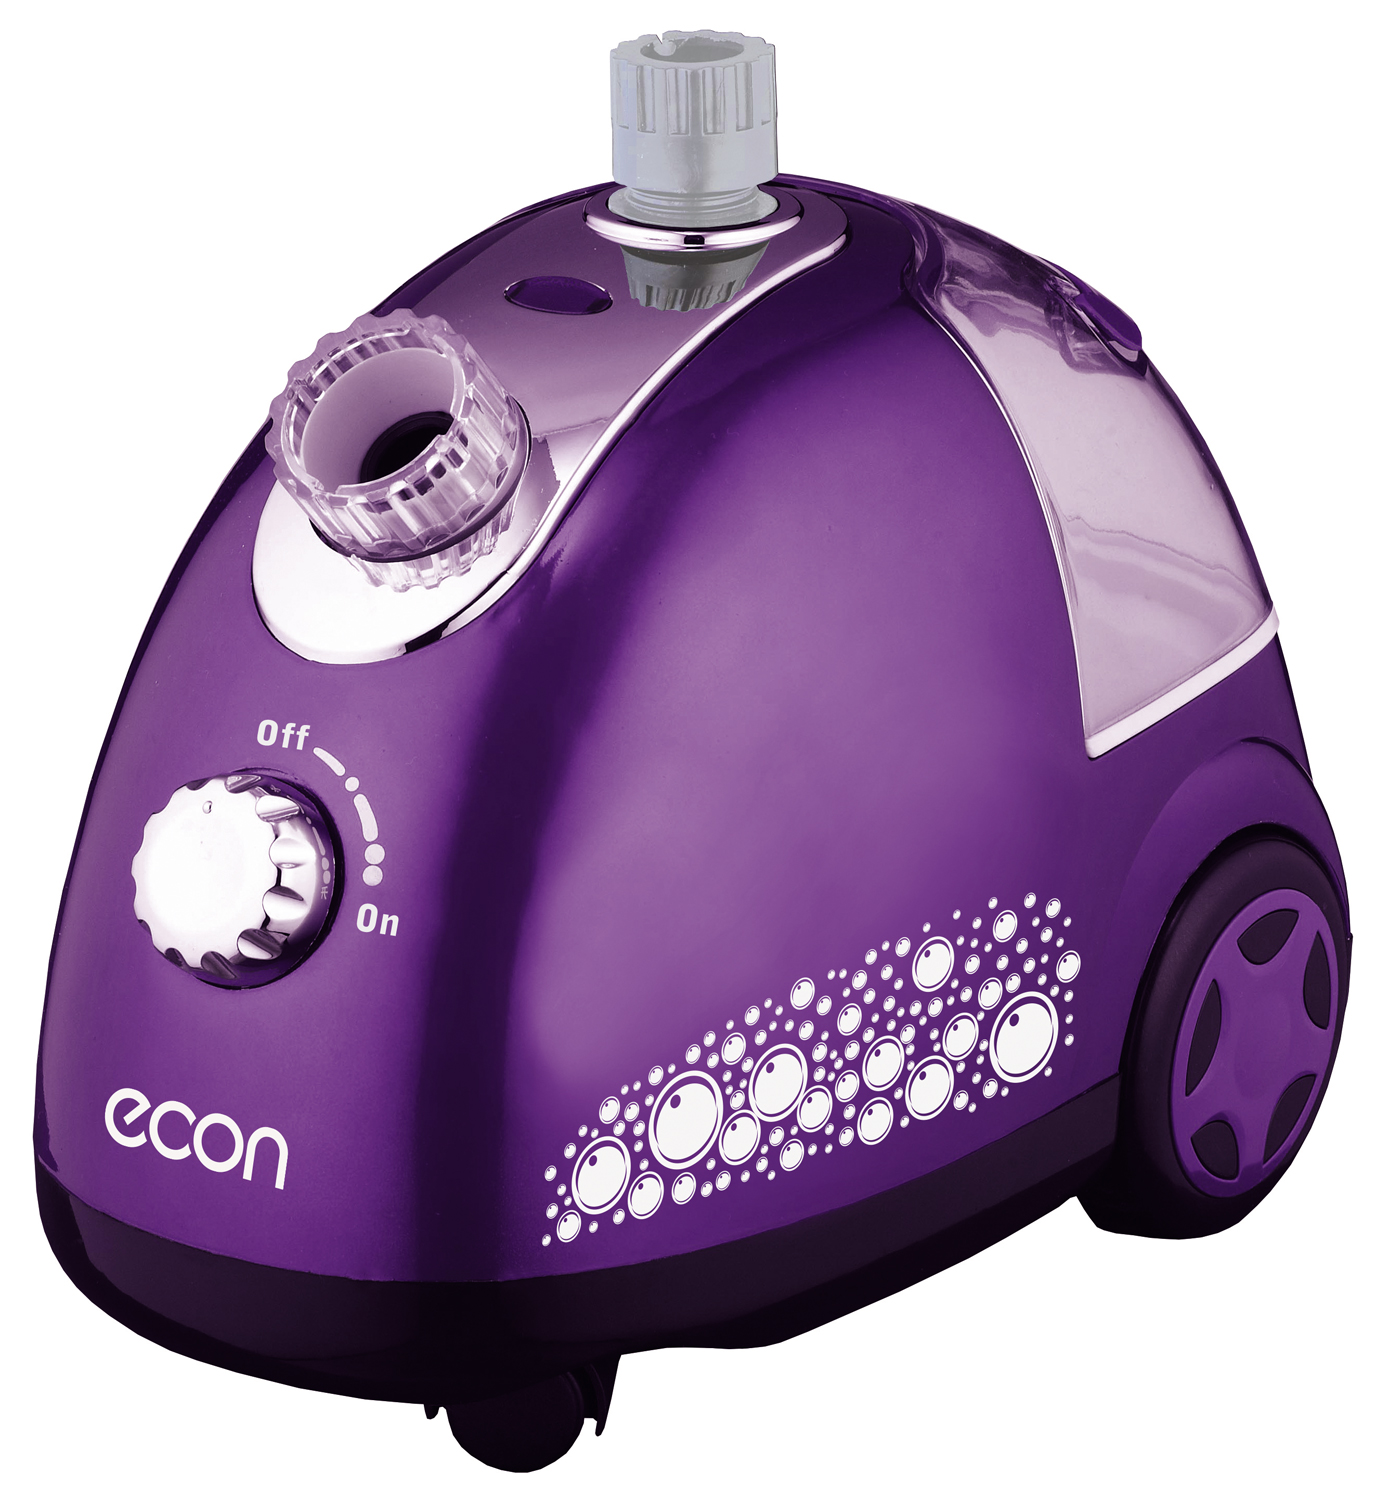 Подошва отпаривателя. Отпариватель ECON Eco-bi1702s, фиолетовый. Отпариватель ECON Eco. Отпариватель ECON Eco-bi1701s. ECON отпариватель бытовой Eco bi2001s.